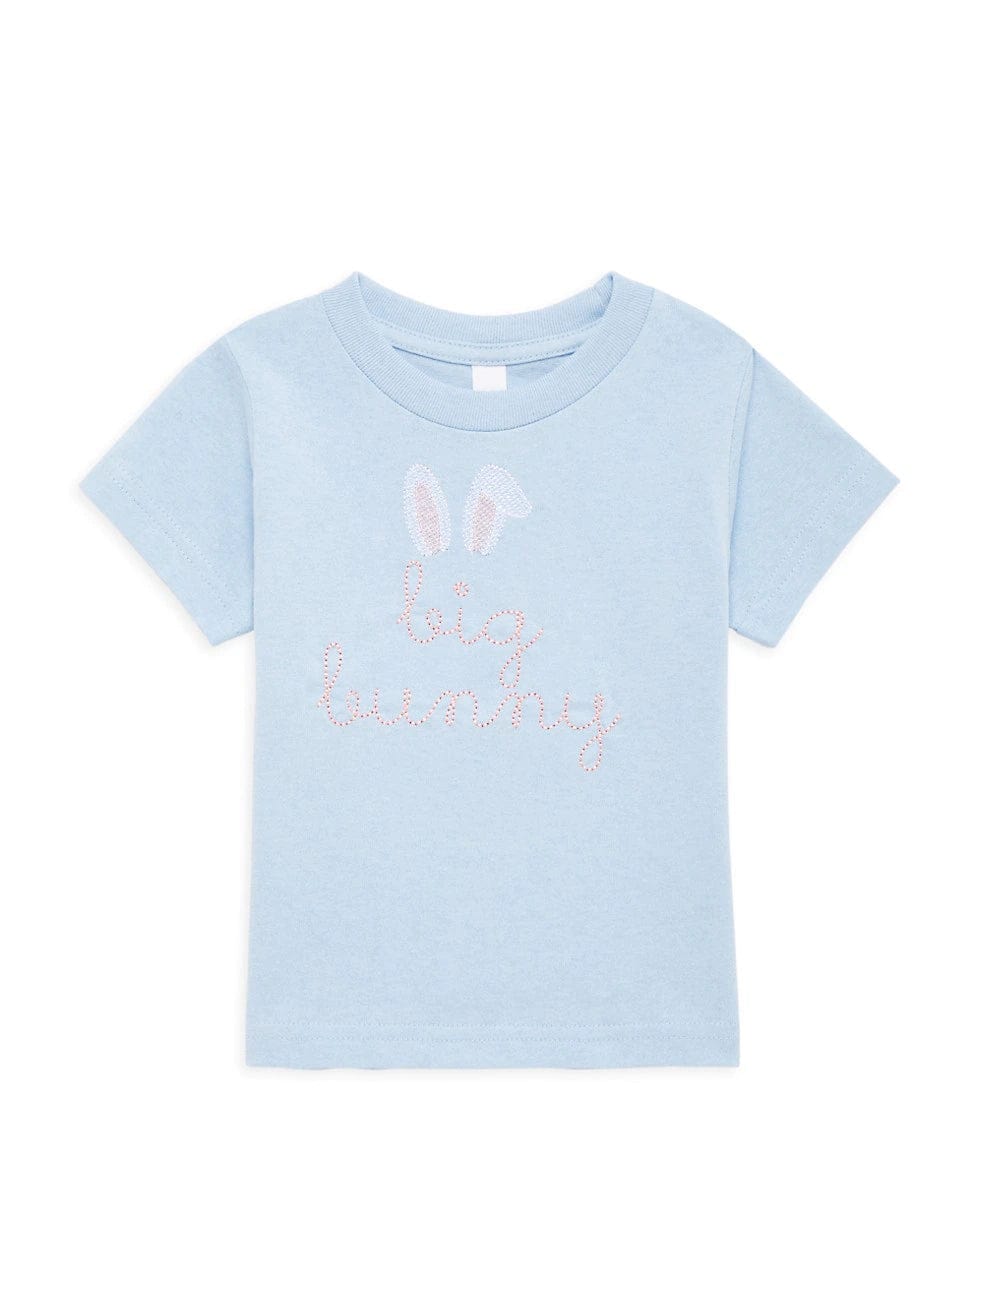 juju + stitch Personalized Custom Embroidered T-shirt Soft Blue / 2T "Big Bunny" T-Shirt